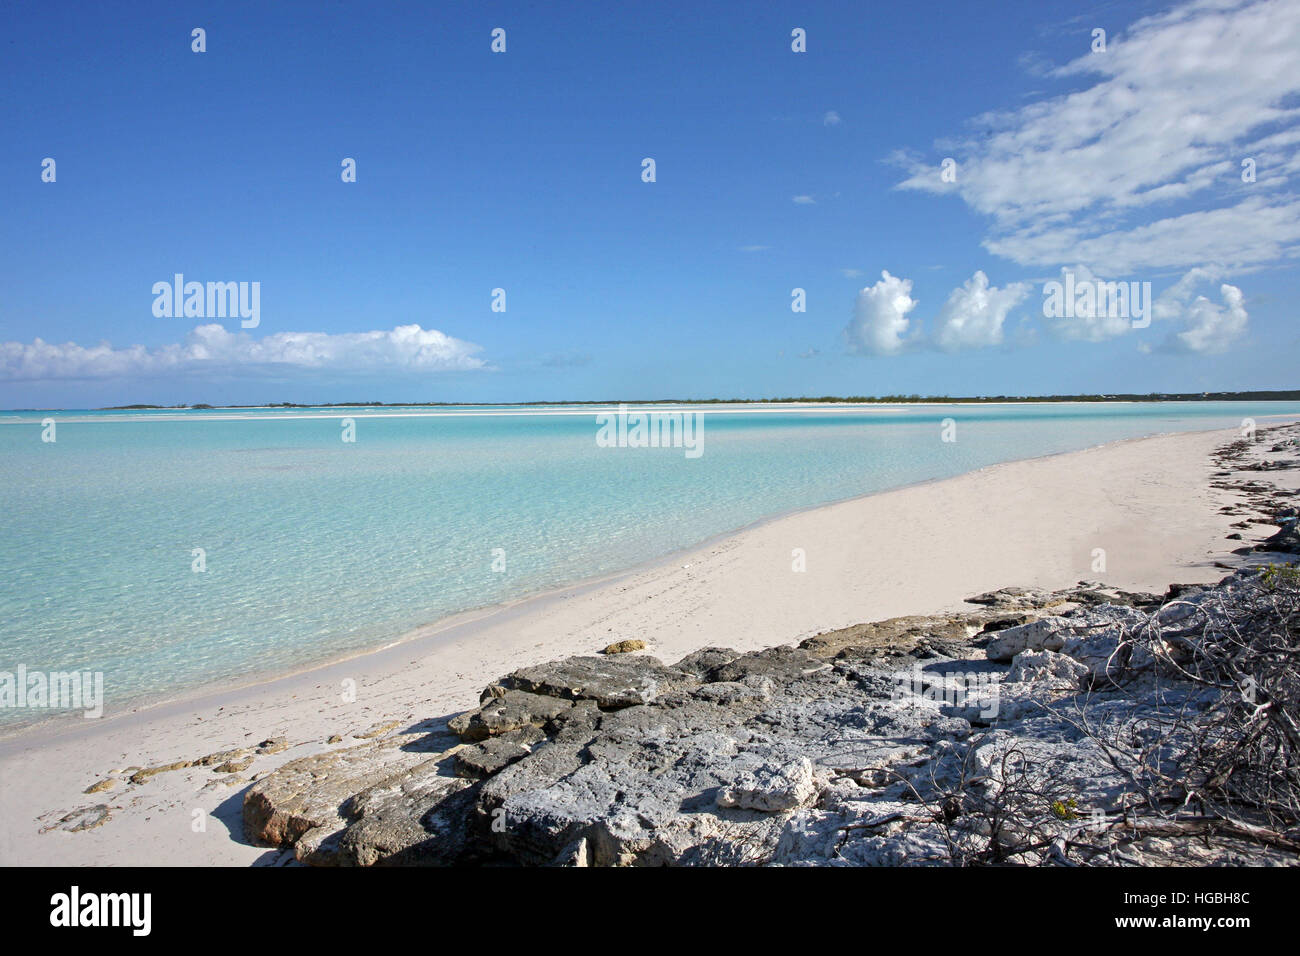 Tropical paradise and white sand beaches in Exuma Bahamas, Caribbean. Island of Great Exuma. Exuma Cays and Swimming Pigs Stock Photo